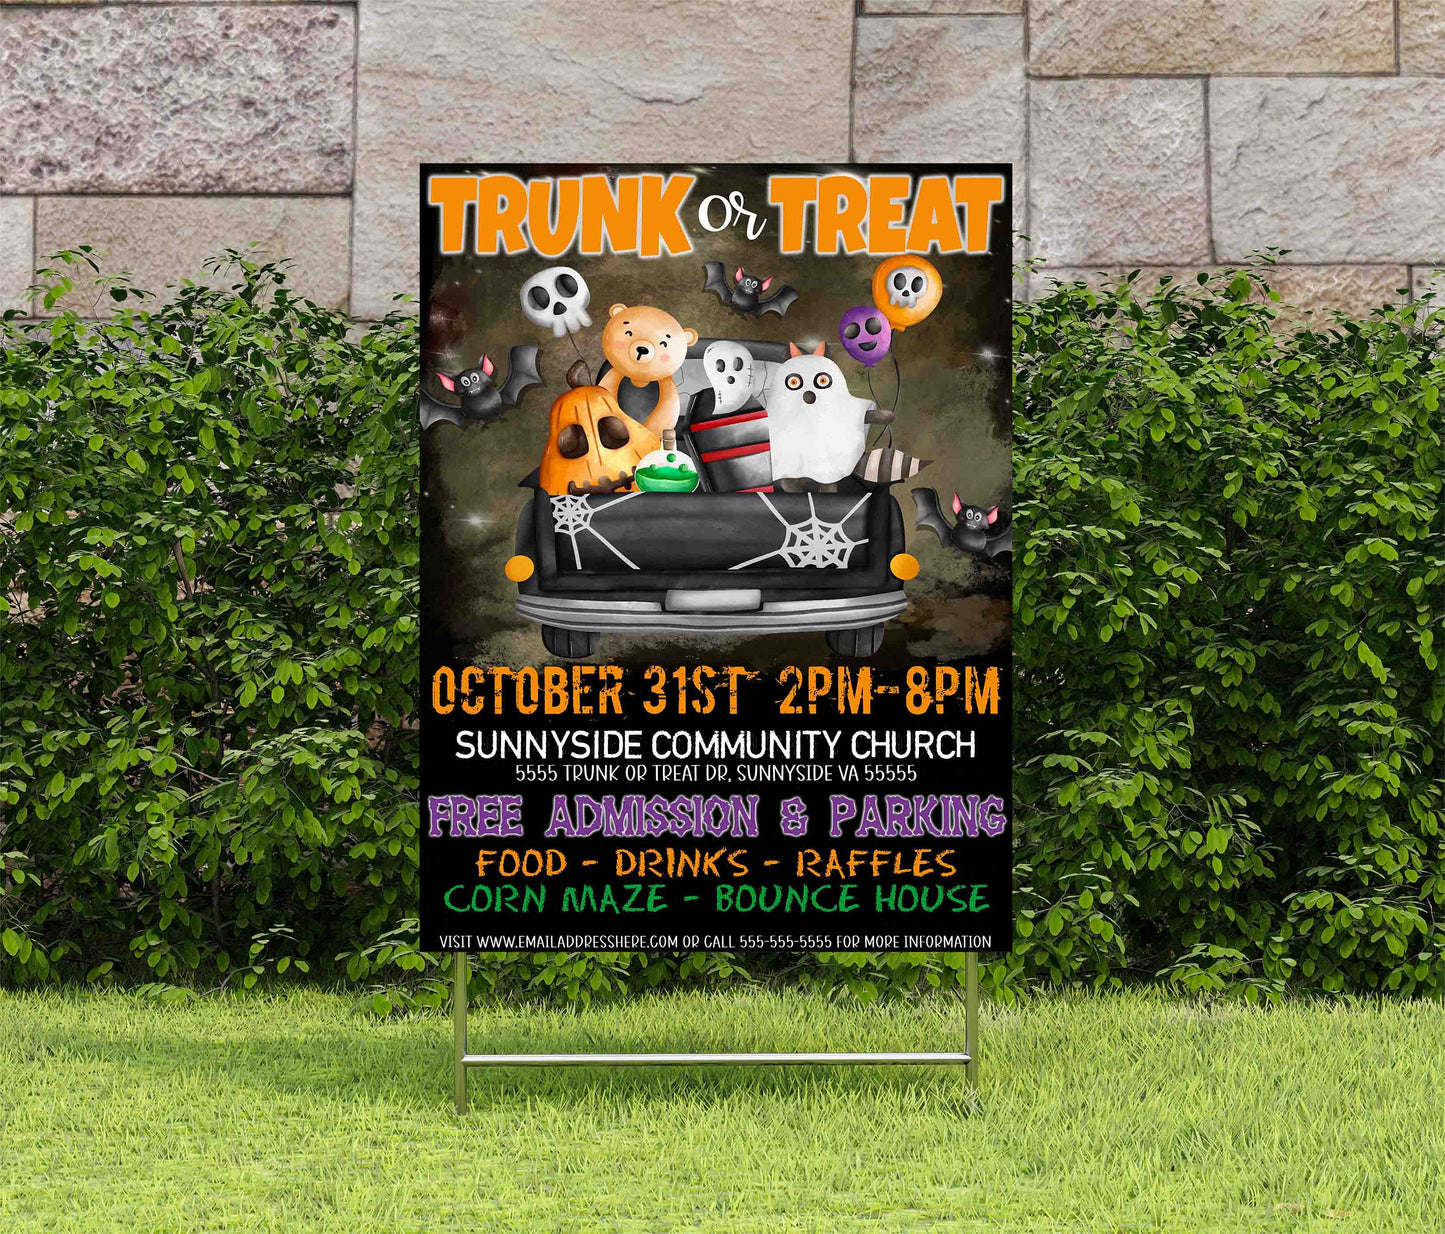 Trunk or Treat Flyer Invitation, Halloween Fall Festival Event, School Church Fundraiser Community Company Business Kids Party, PTO PTA